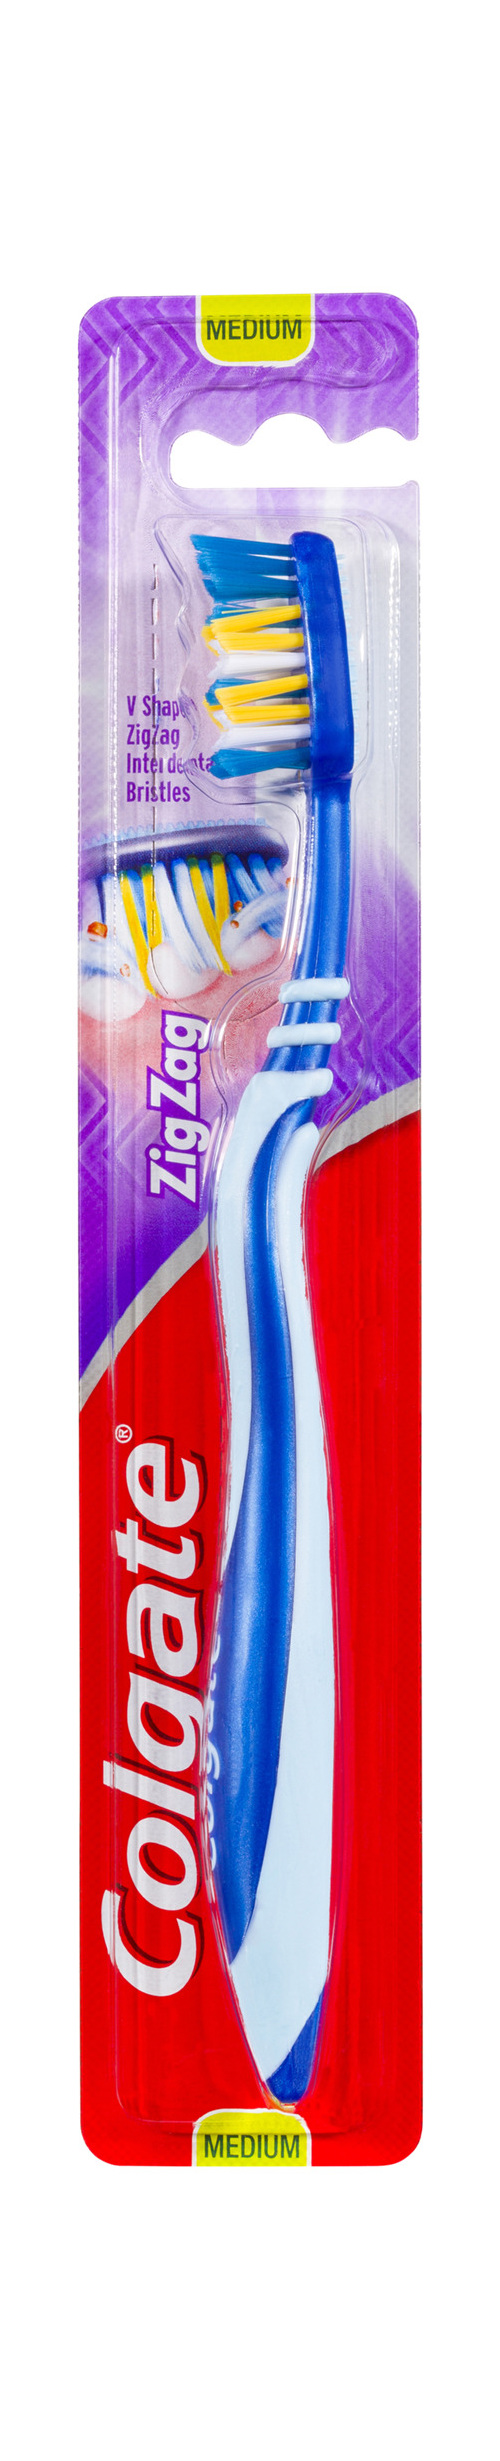 Colgate Zig Zag Manual Toothbrush, 1 Pack, Medium Bristles, Interdental Reach